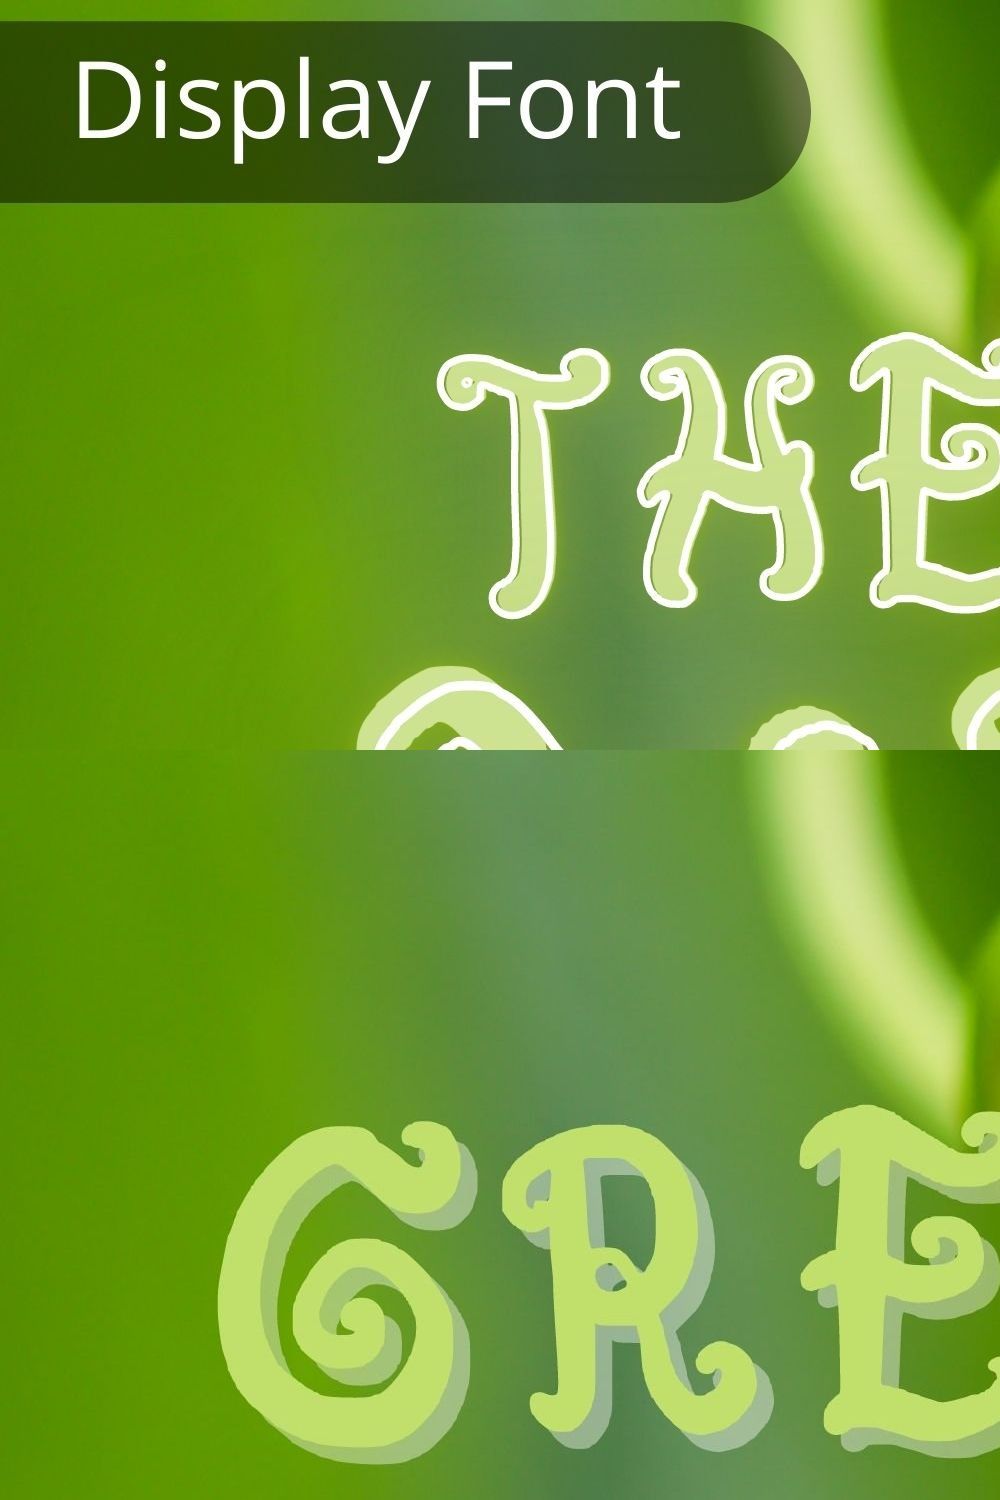 The Vine font, SVG font pinterest preview image.